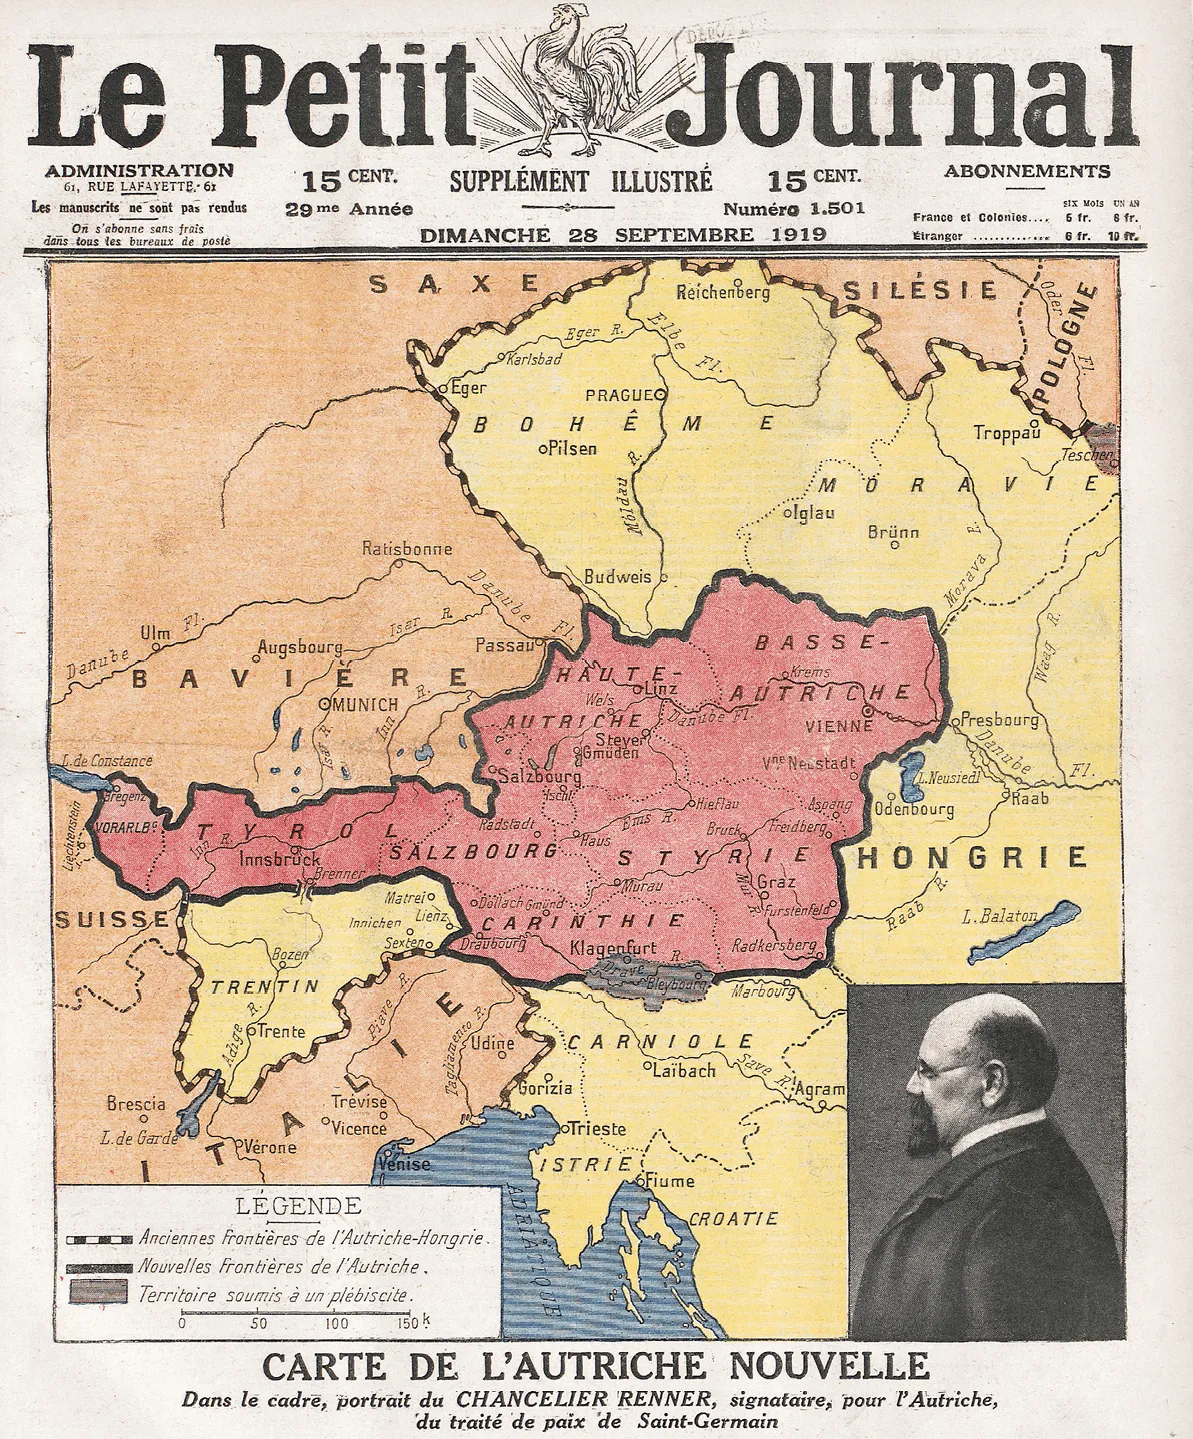 Petit Journal